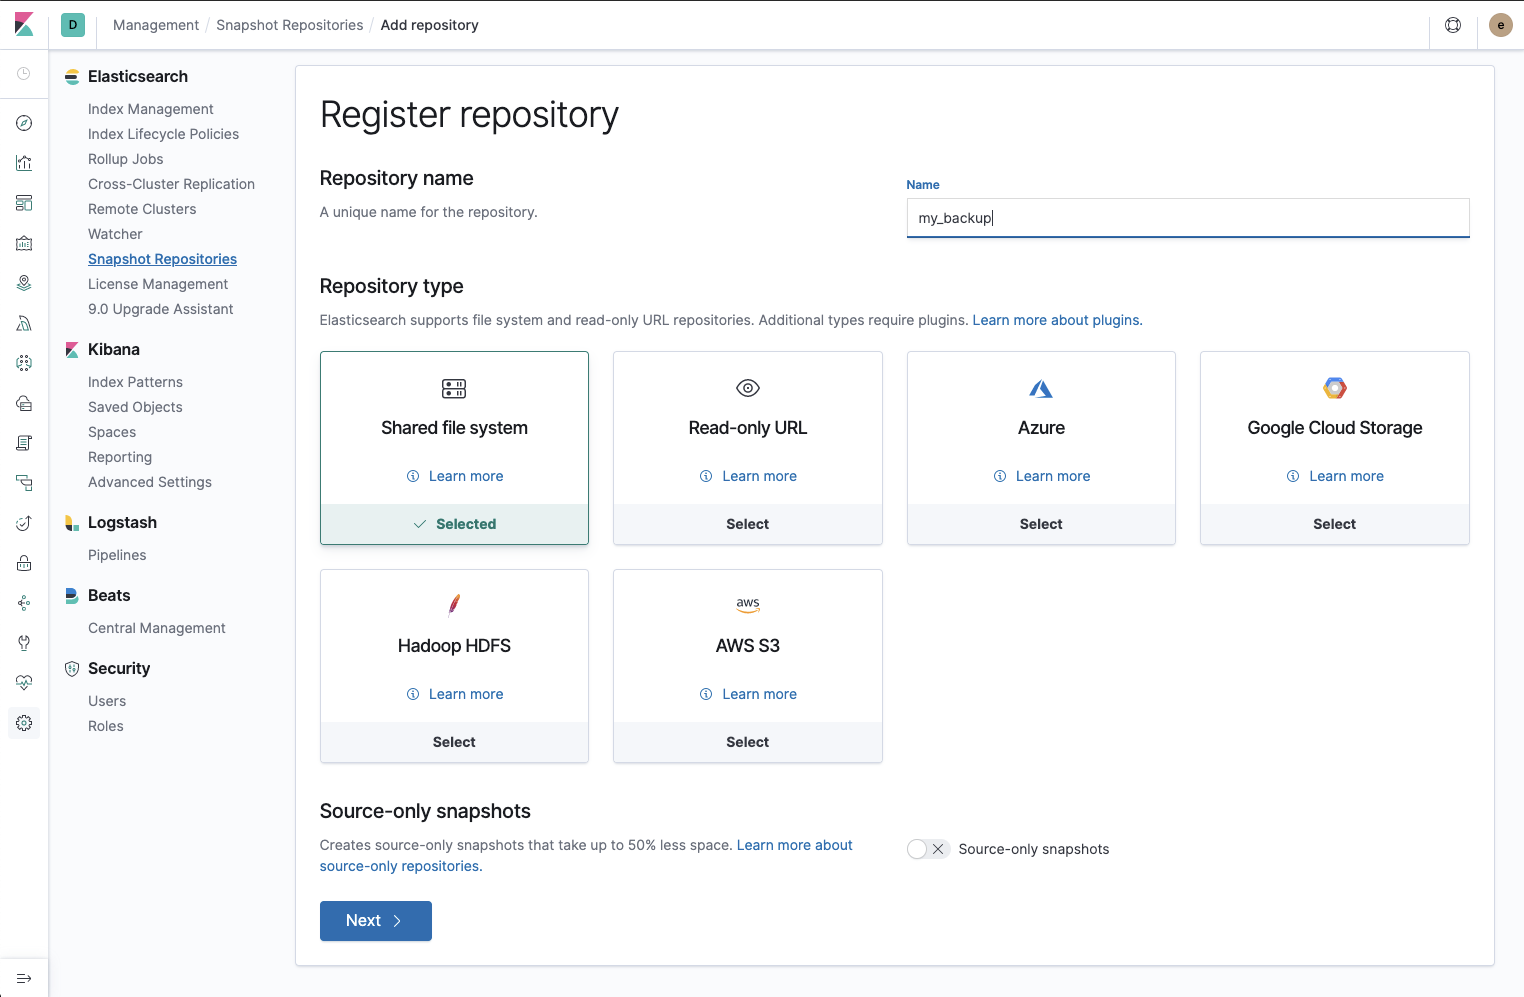 Register repository